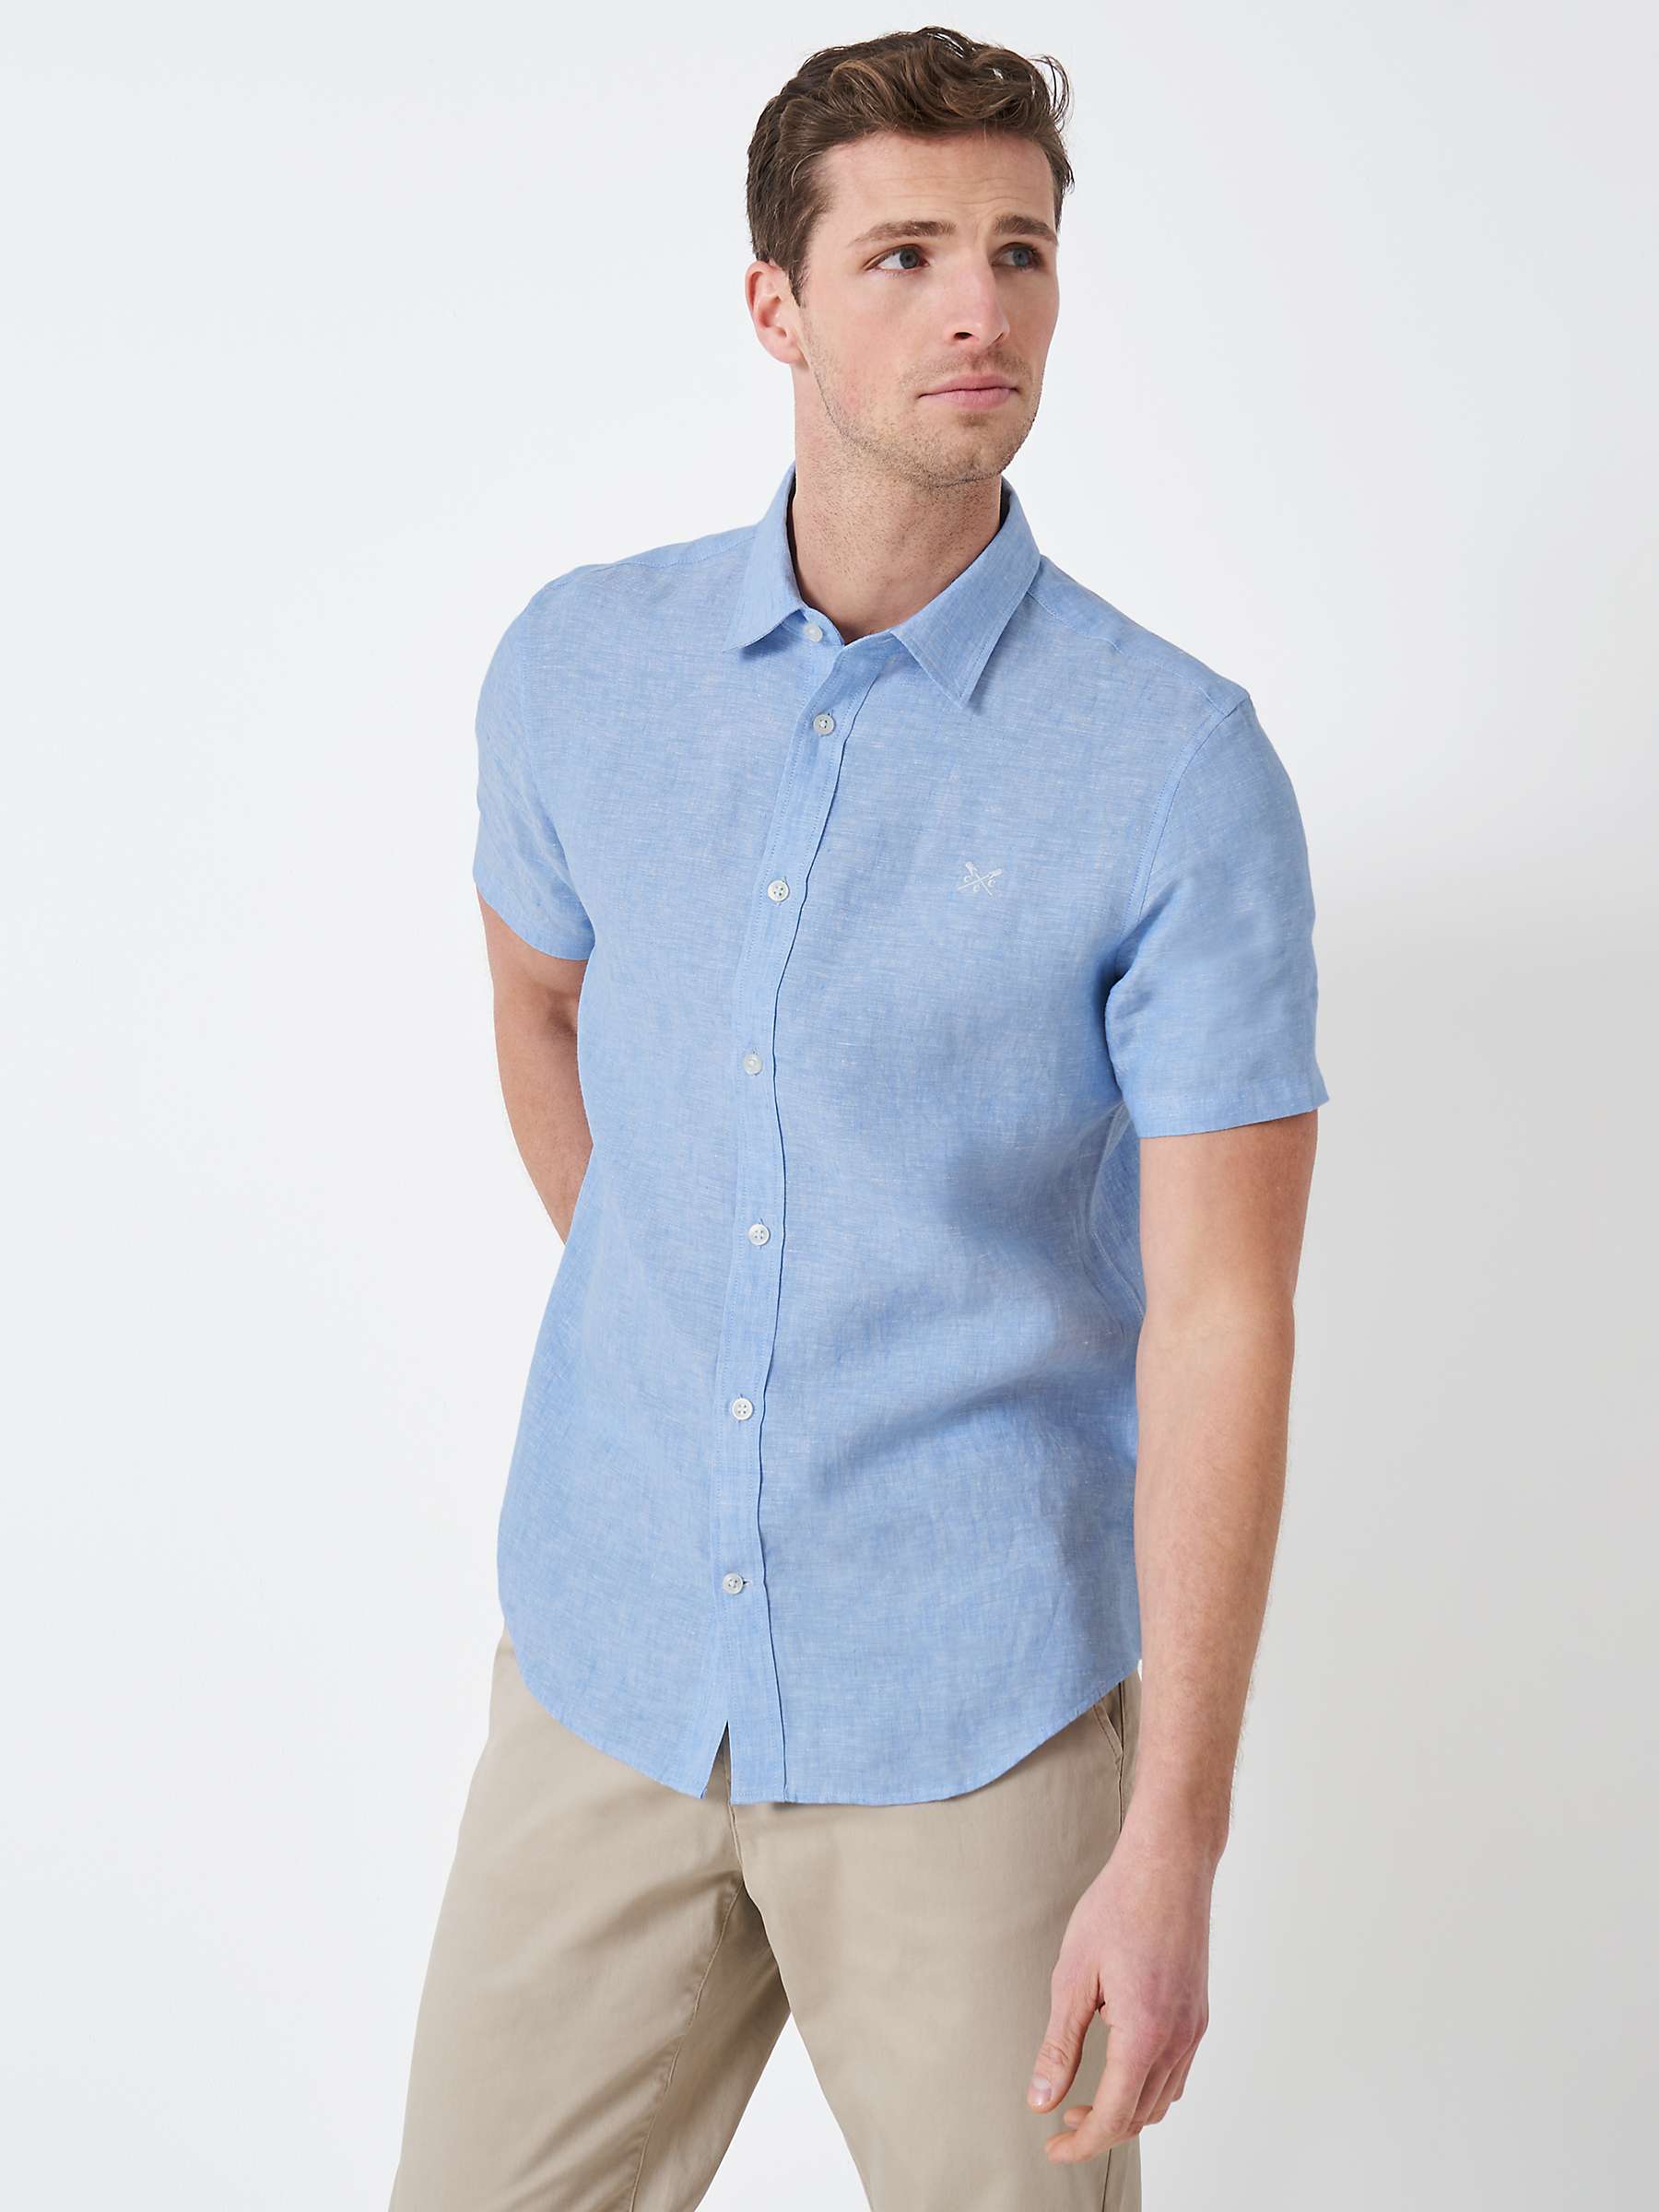 Crew Clothing Linen Short Sleeve Shirt, Light Blue at John Lewis & Partners